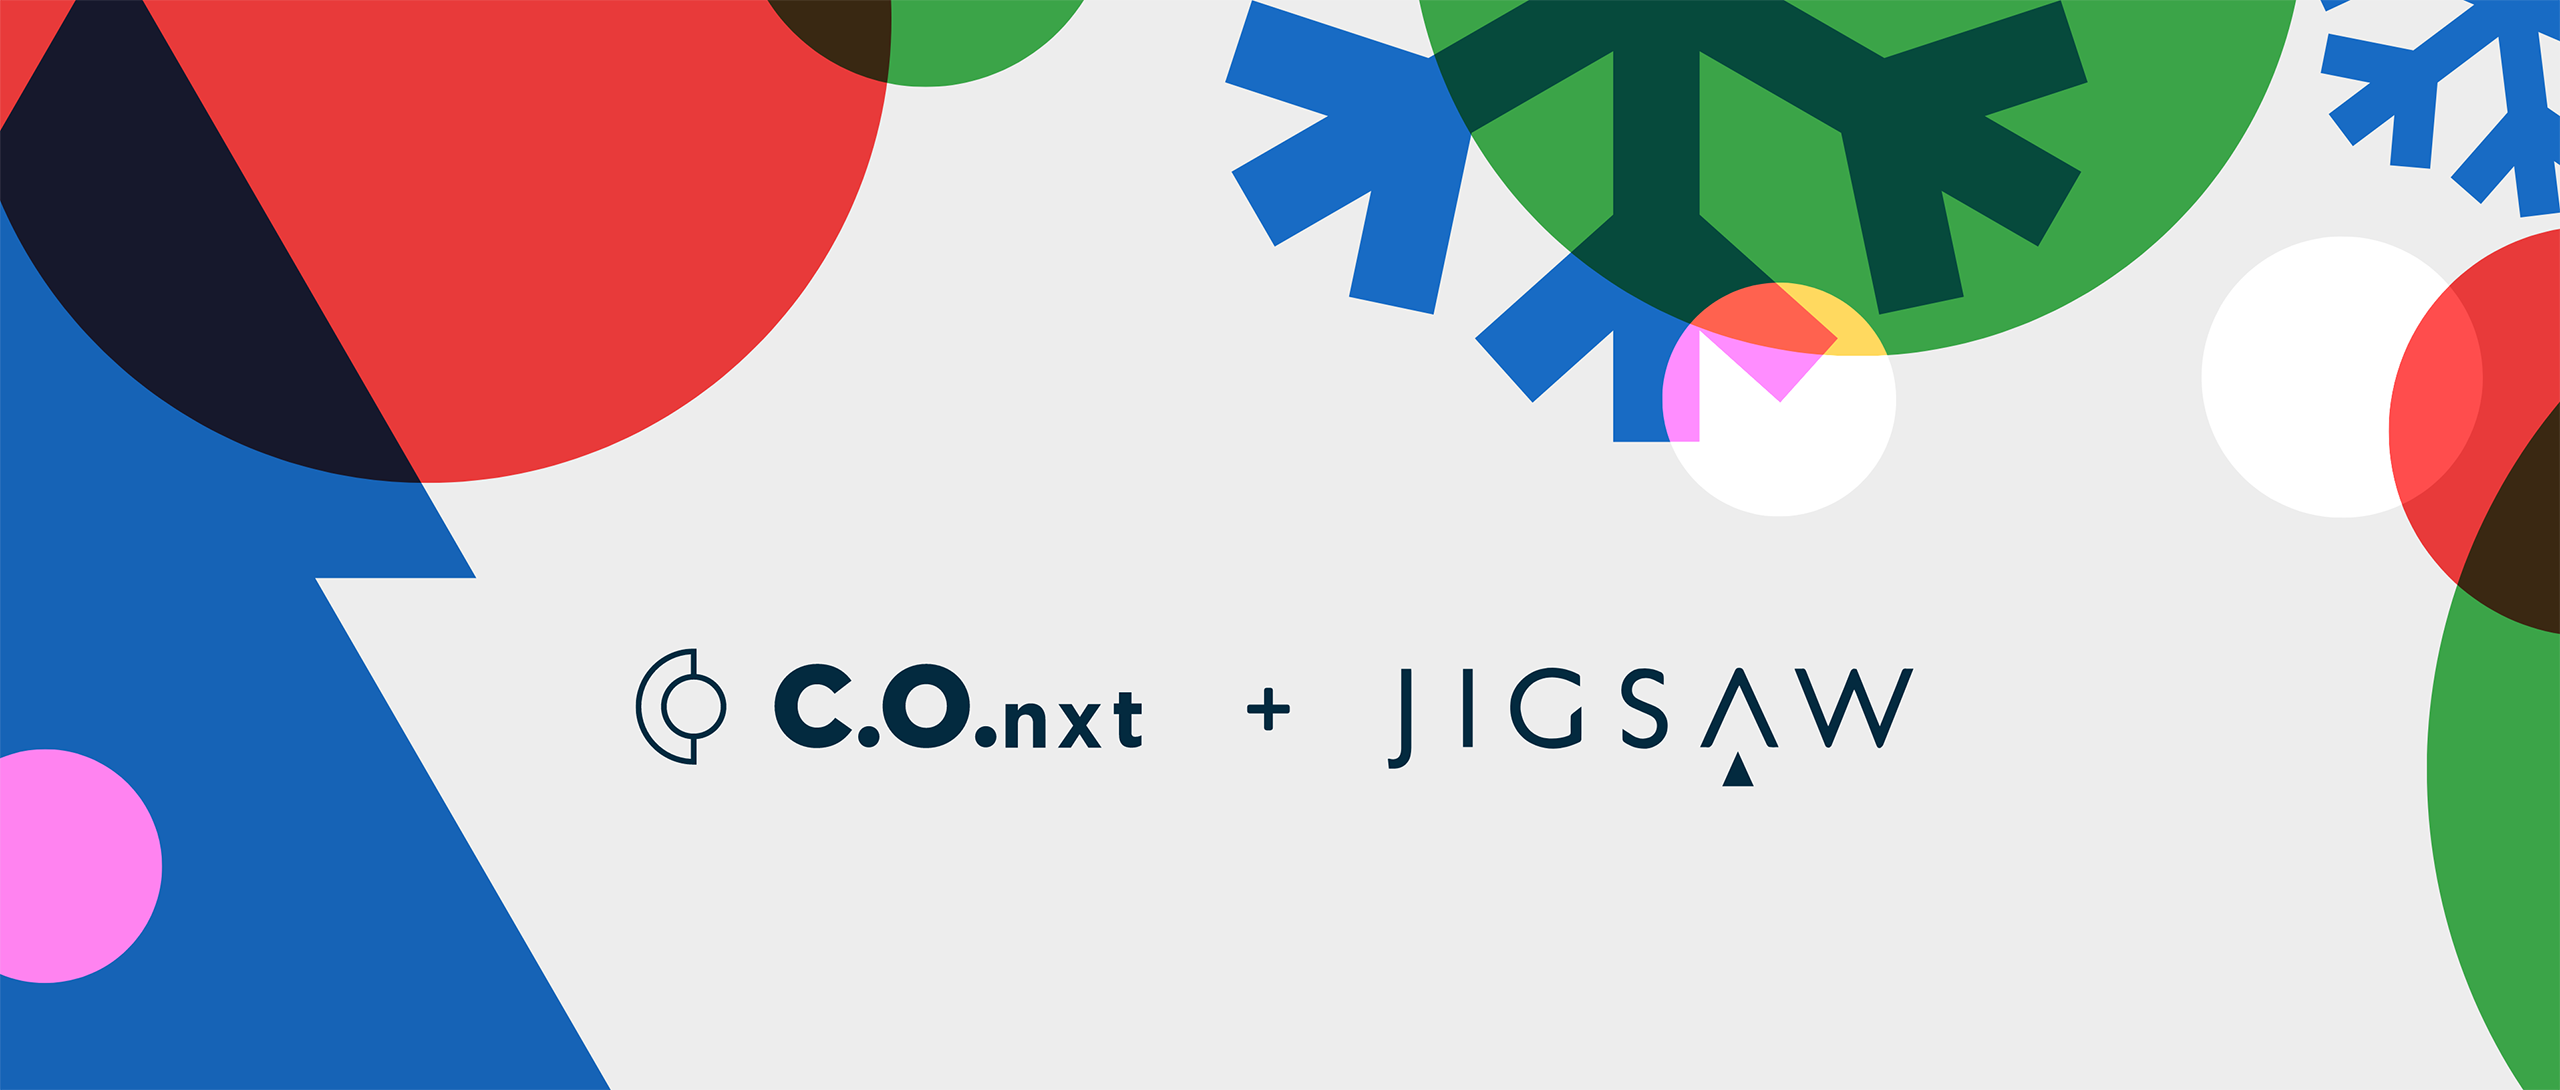 C.O.nxt + Jigsaw